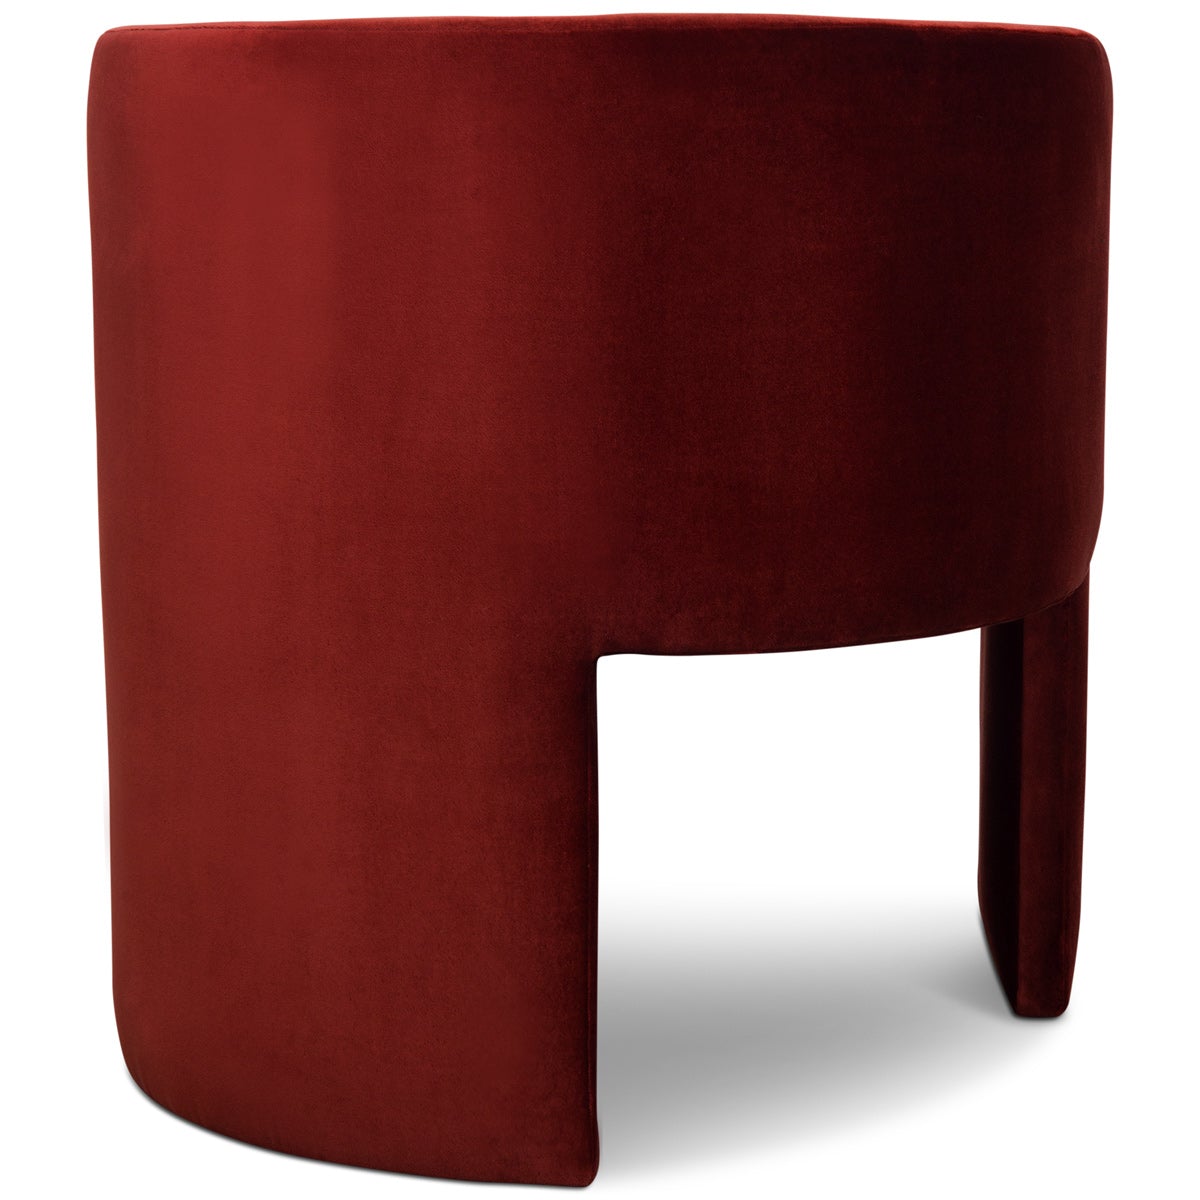 Martinique Chair in Velvet - ModShop1.com